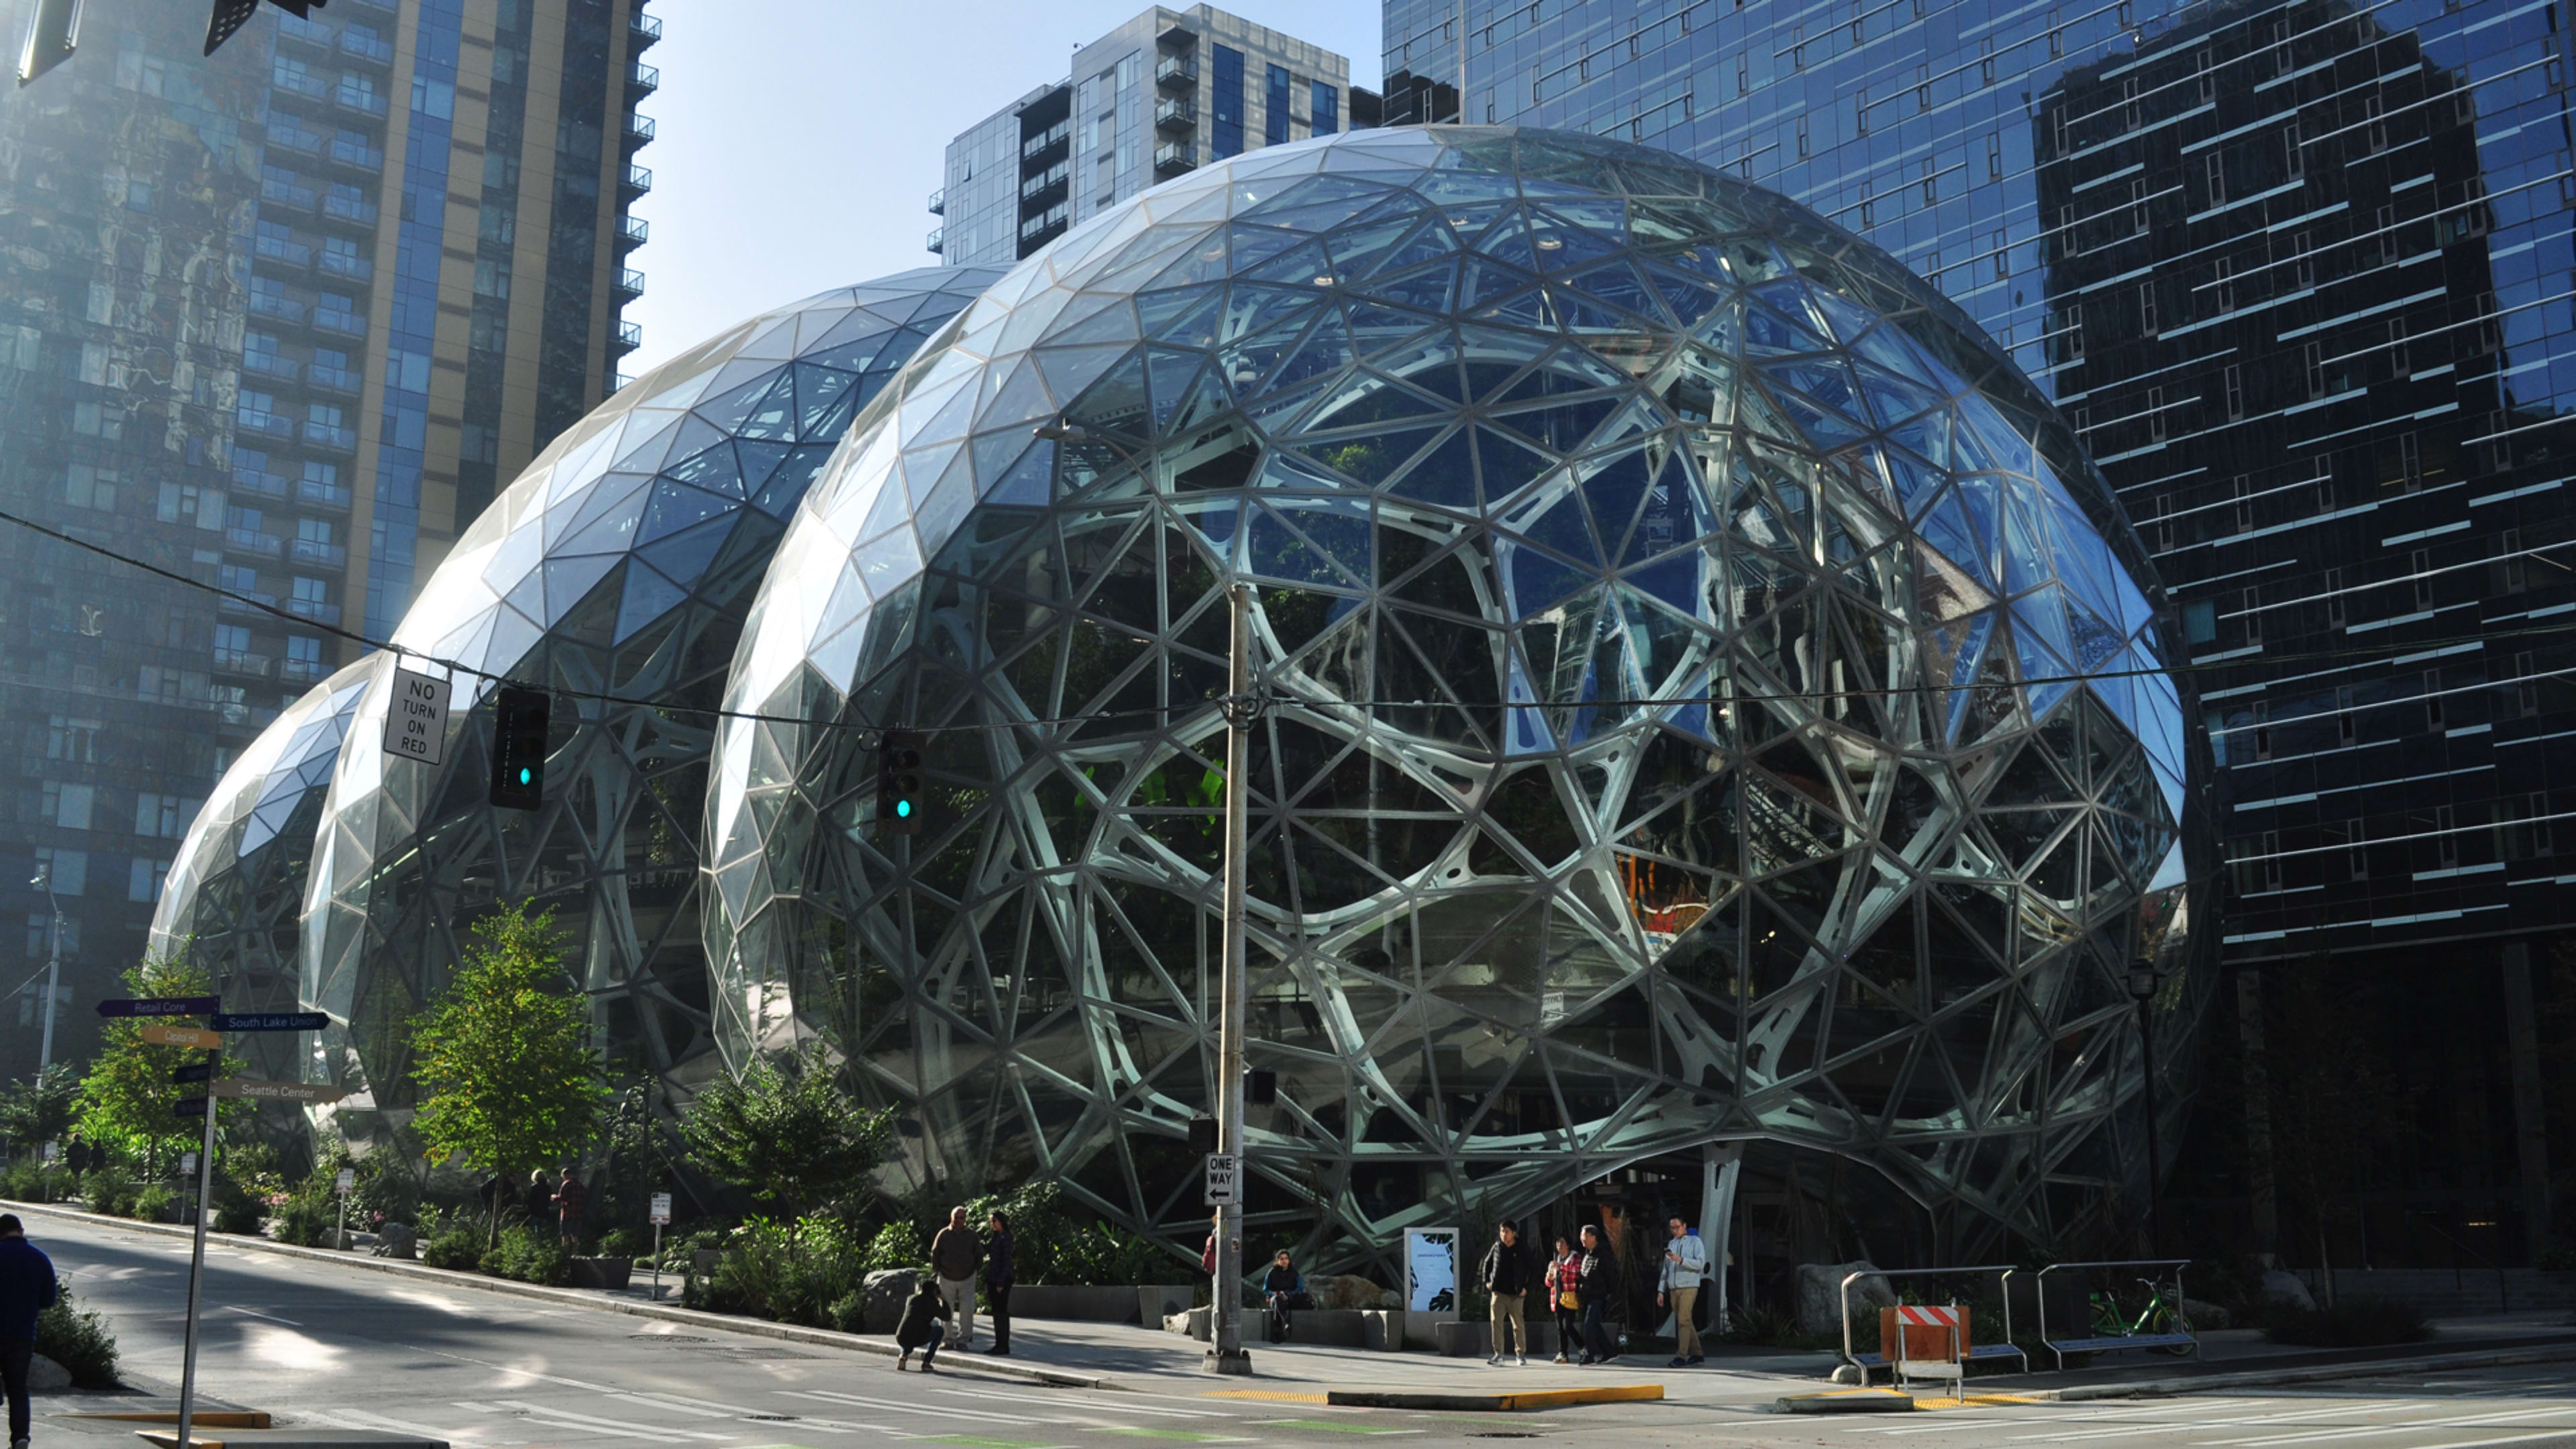 “Momazonians” want Jeff Bezos to start offering daycare at Amazon